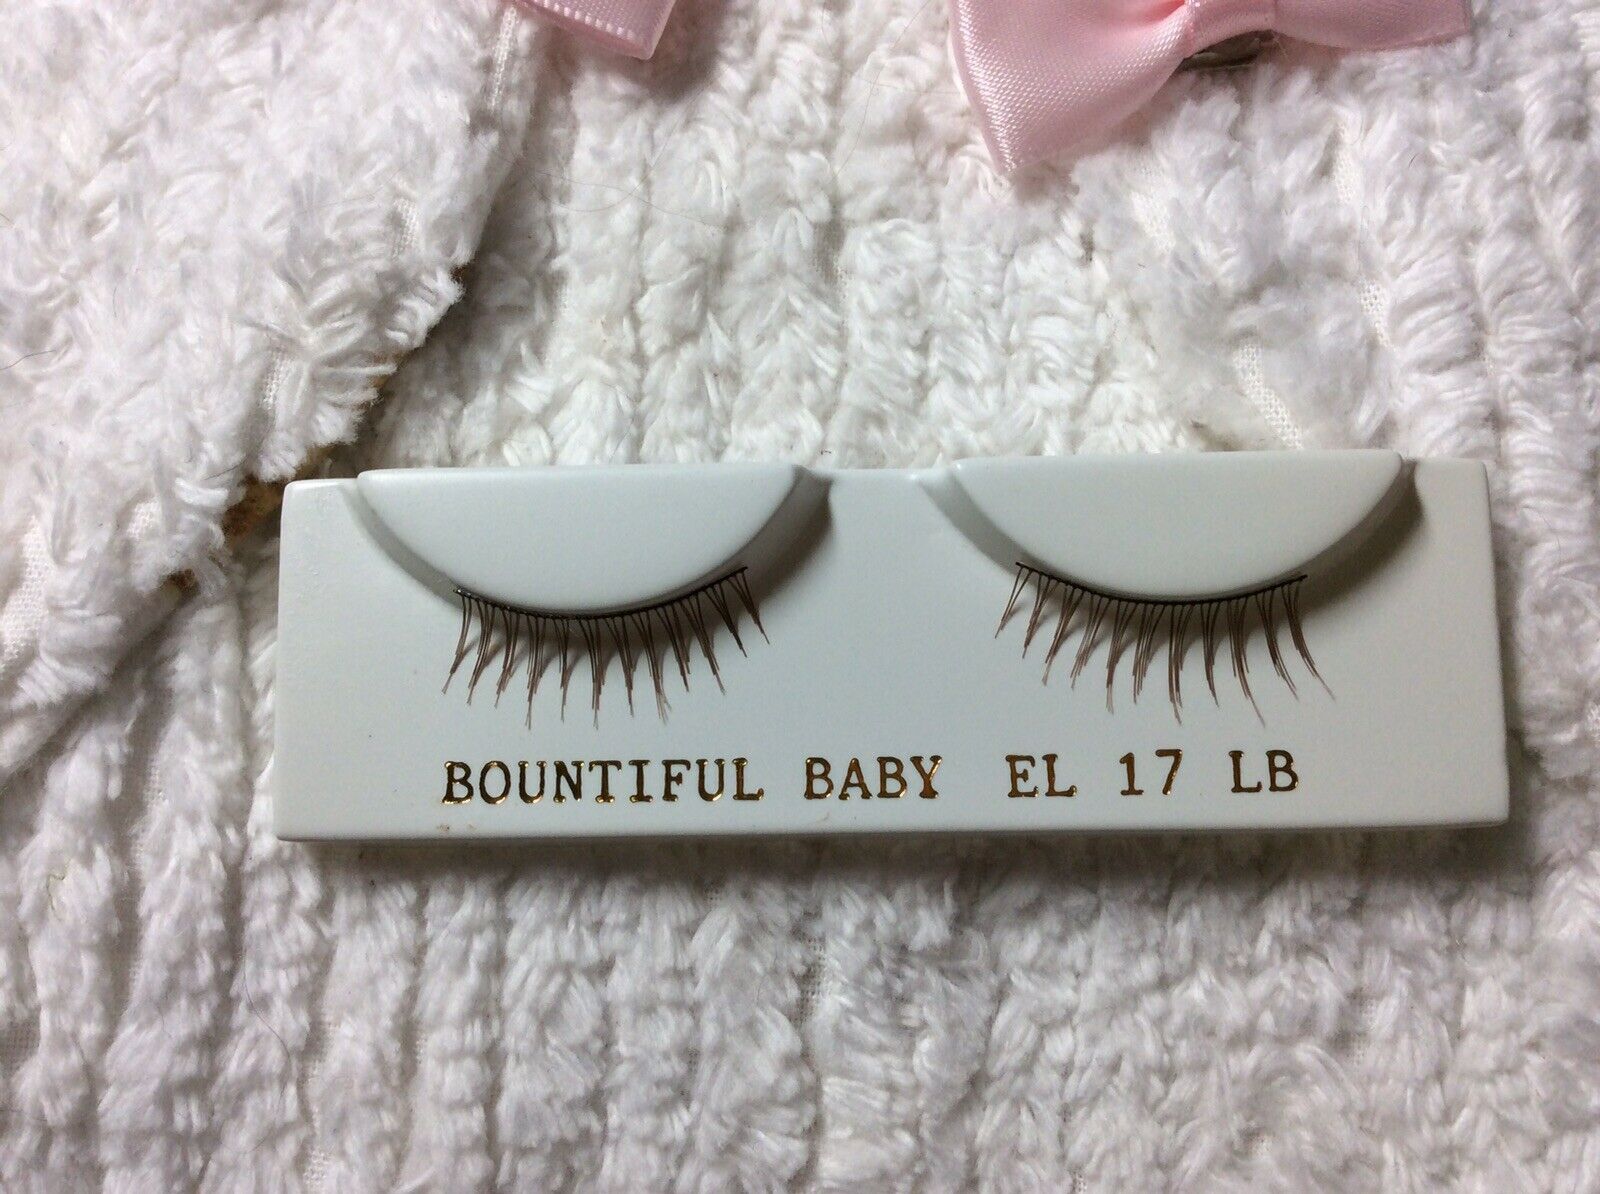 El 17 Light Brown Baby Eyelashes ~ Reborn Doll Supplies